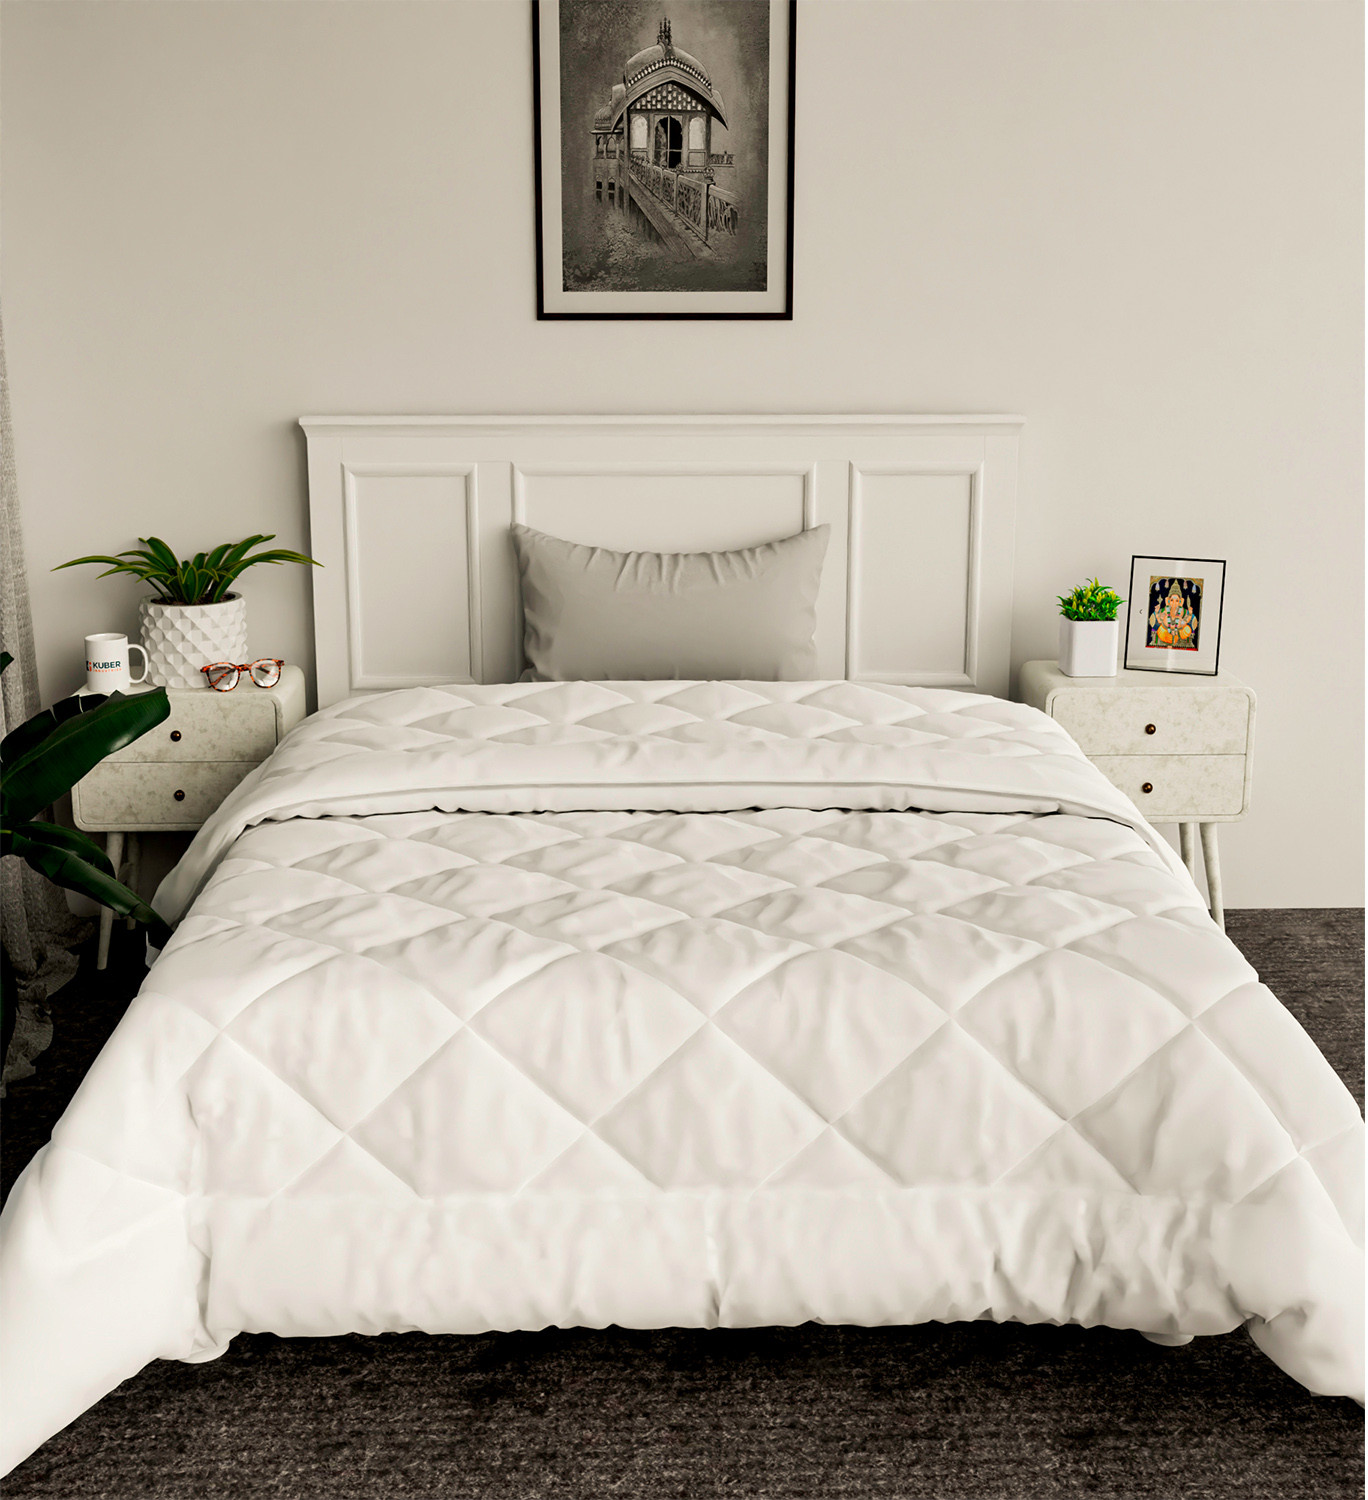 Kuber Industries Comforter for Single Bed|Microfiber Winter Dohar for Single Bed|220 GSM Reversible Comforter|AC Quilt (White)